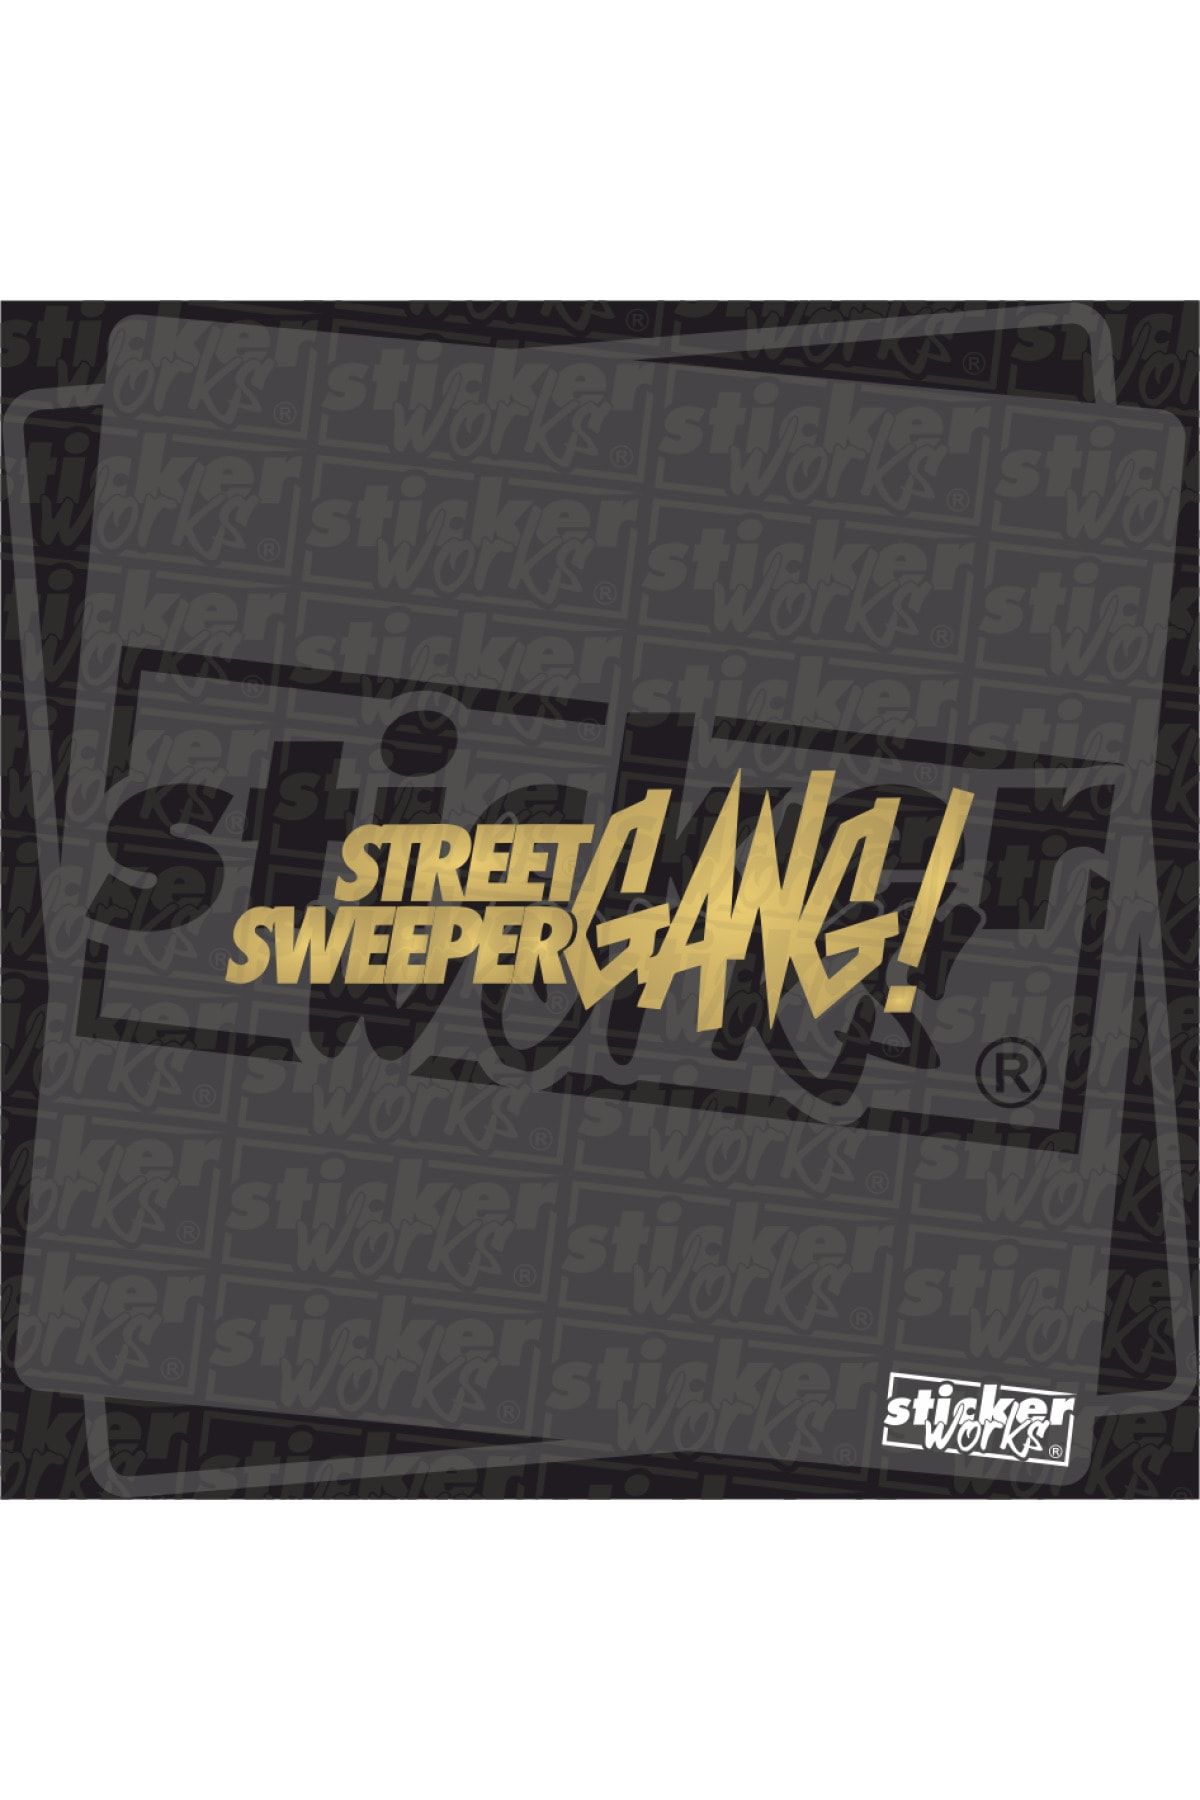 Sticker Works Street Sweeper Gang Sticker